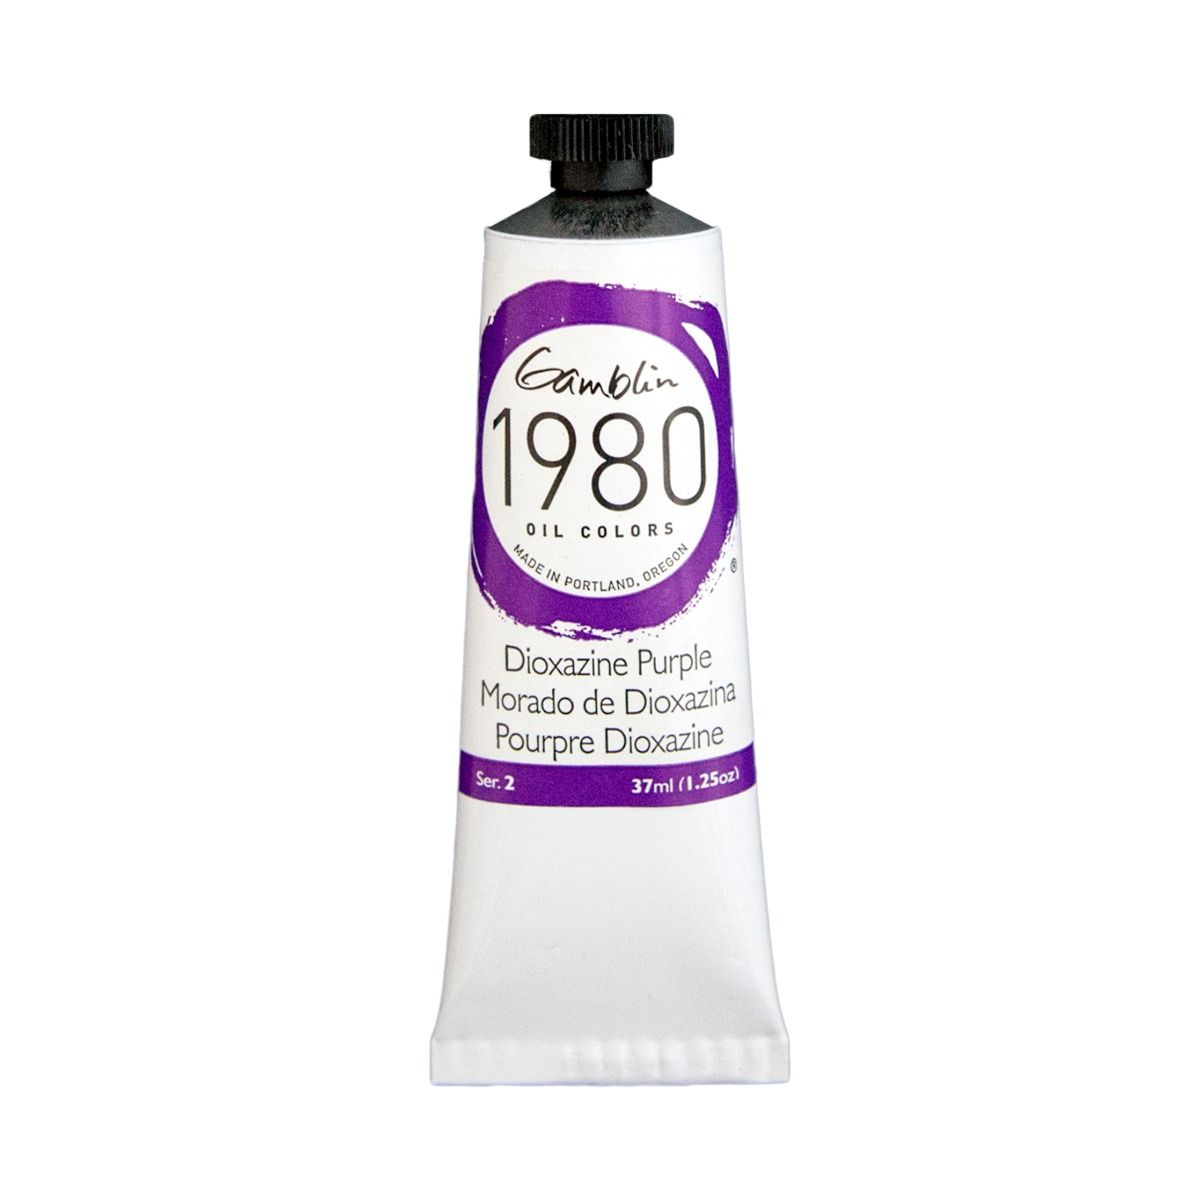 Gamblin 1980 Oils - Dioxazine Purple, 37 ml (1.25oz)